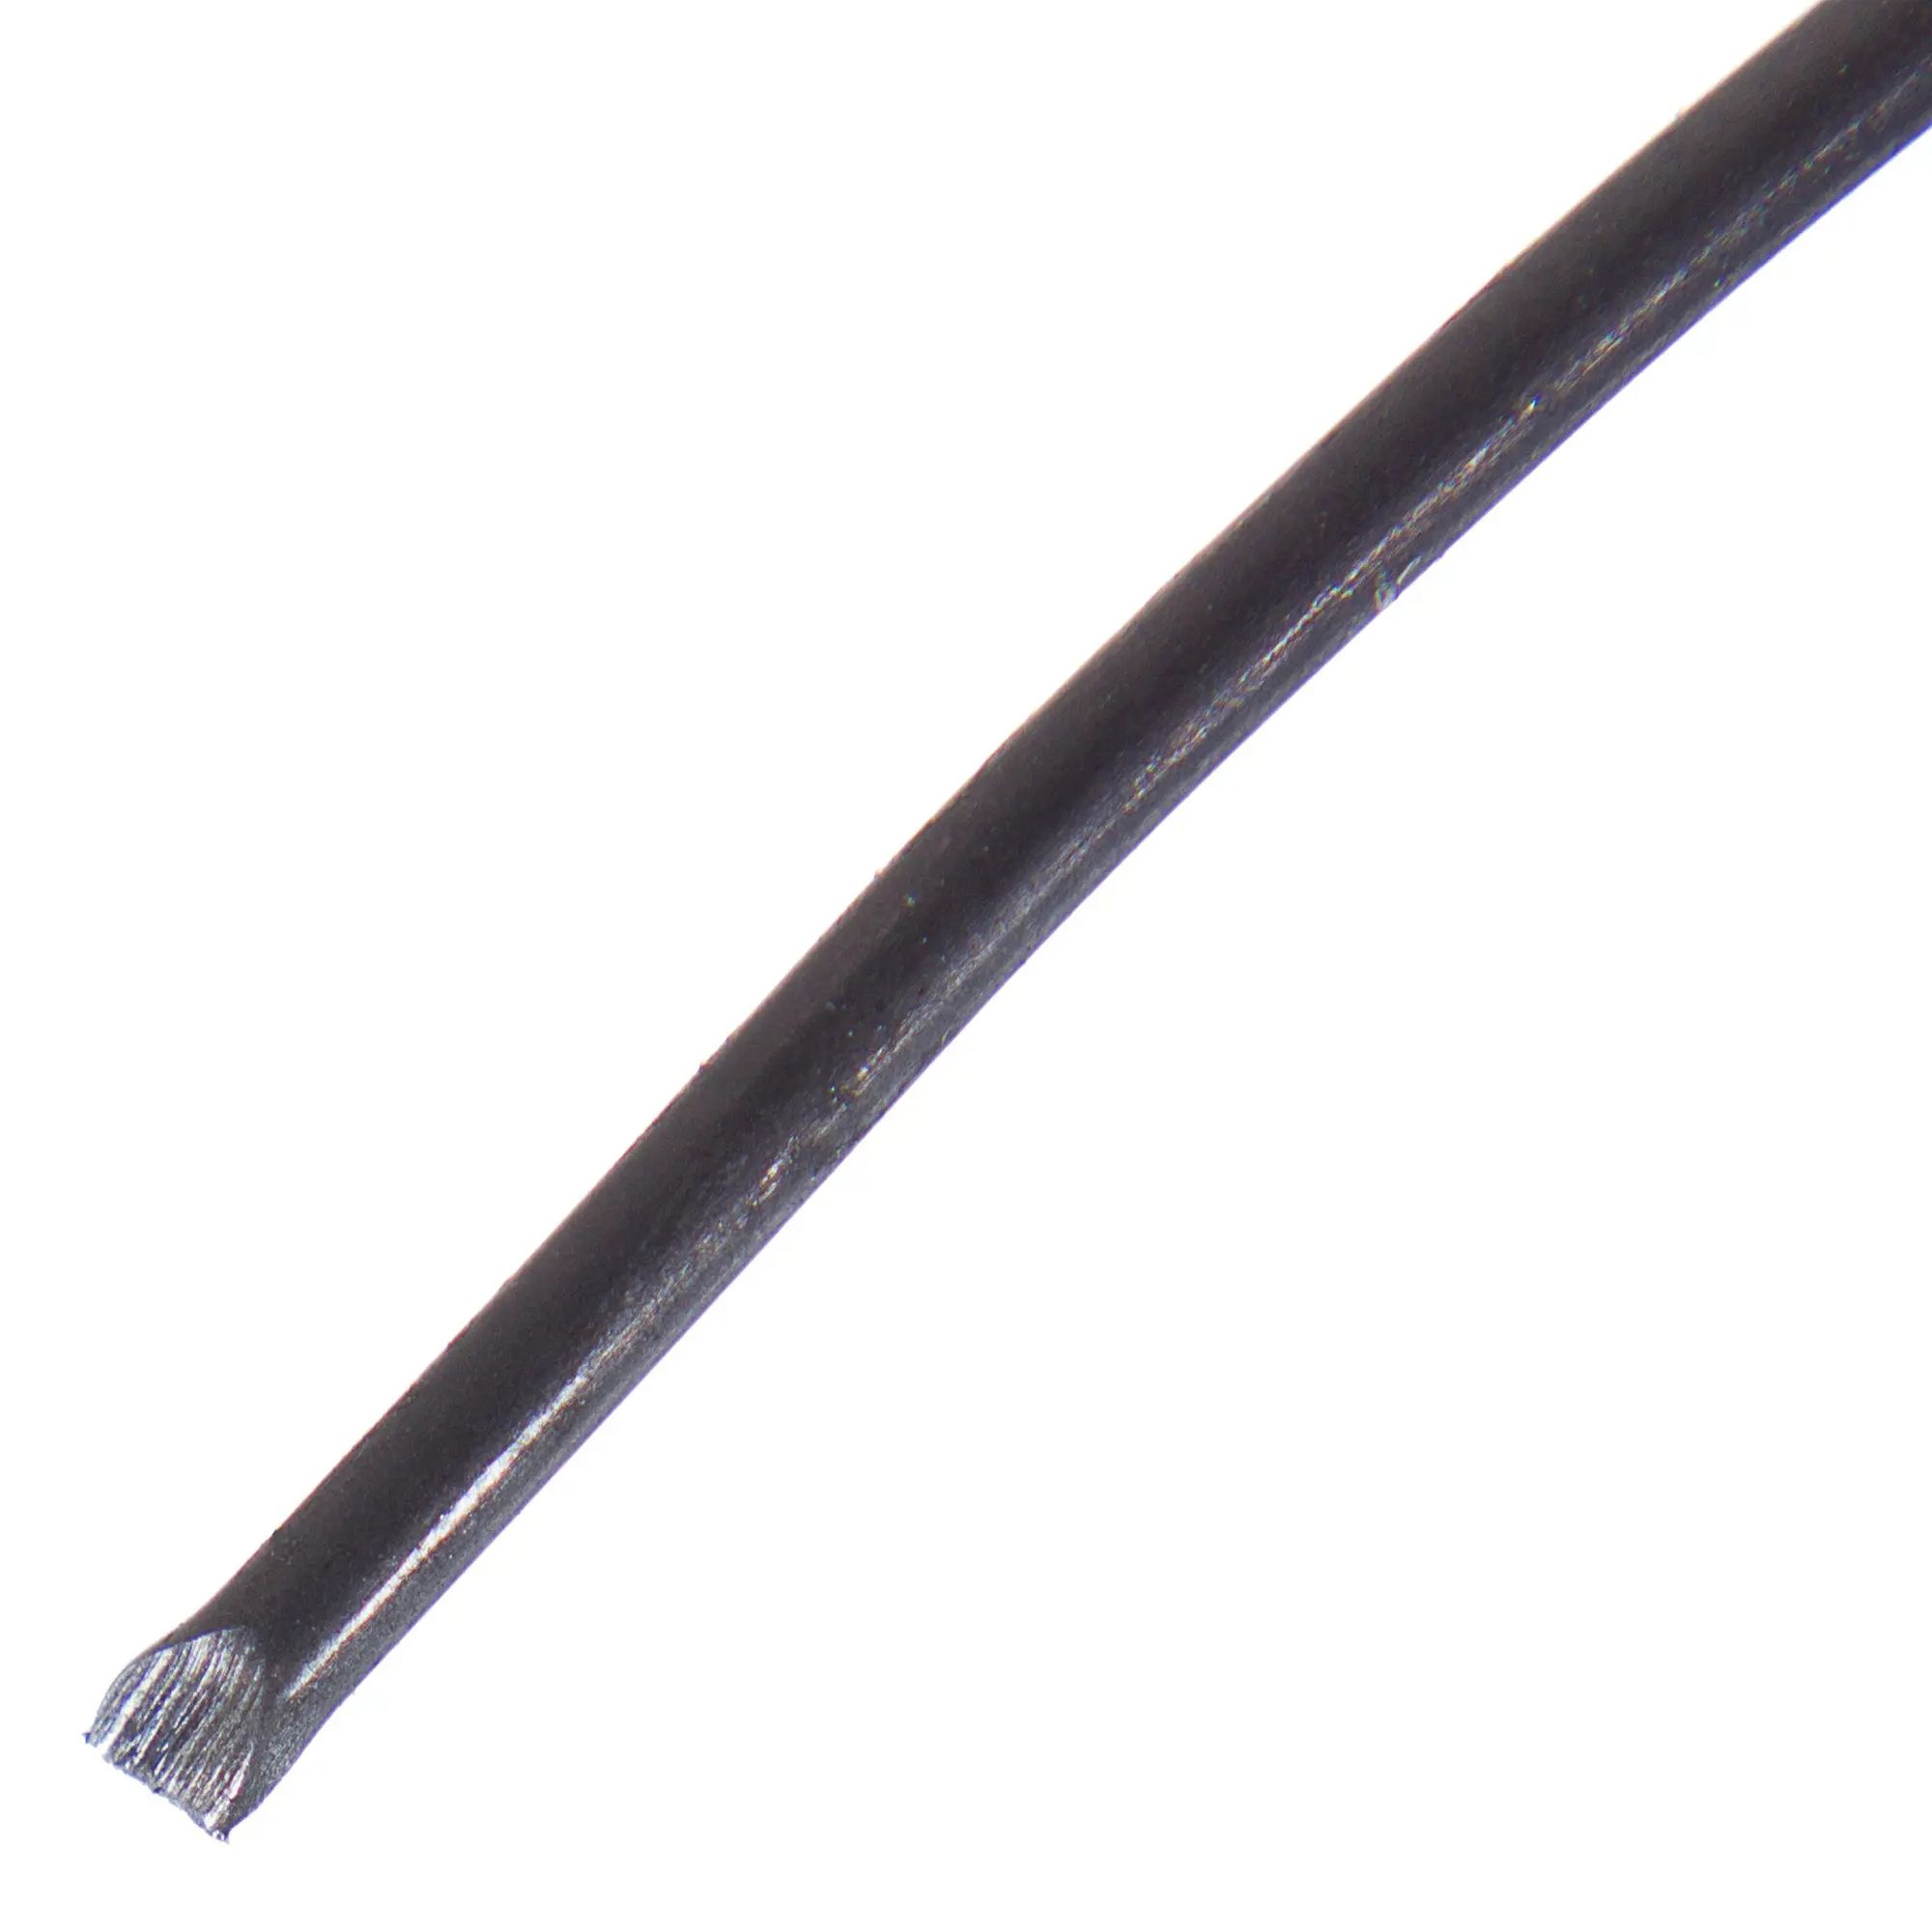 Вязальная проволока КРЕПКО-НАКРЕПКО, 47921, 1,2 мм, клубок, 200 г проволока крепко накрепко